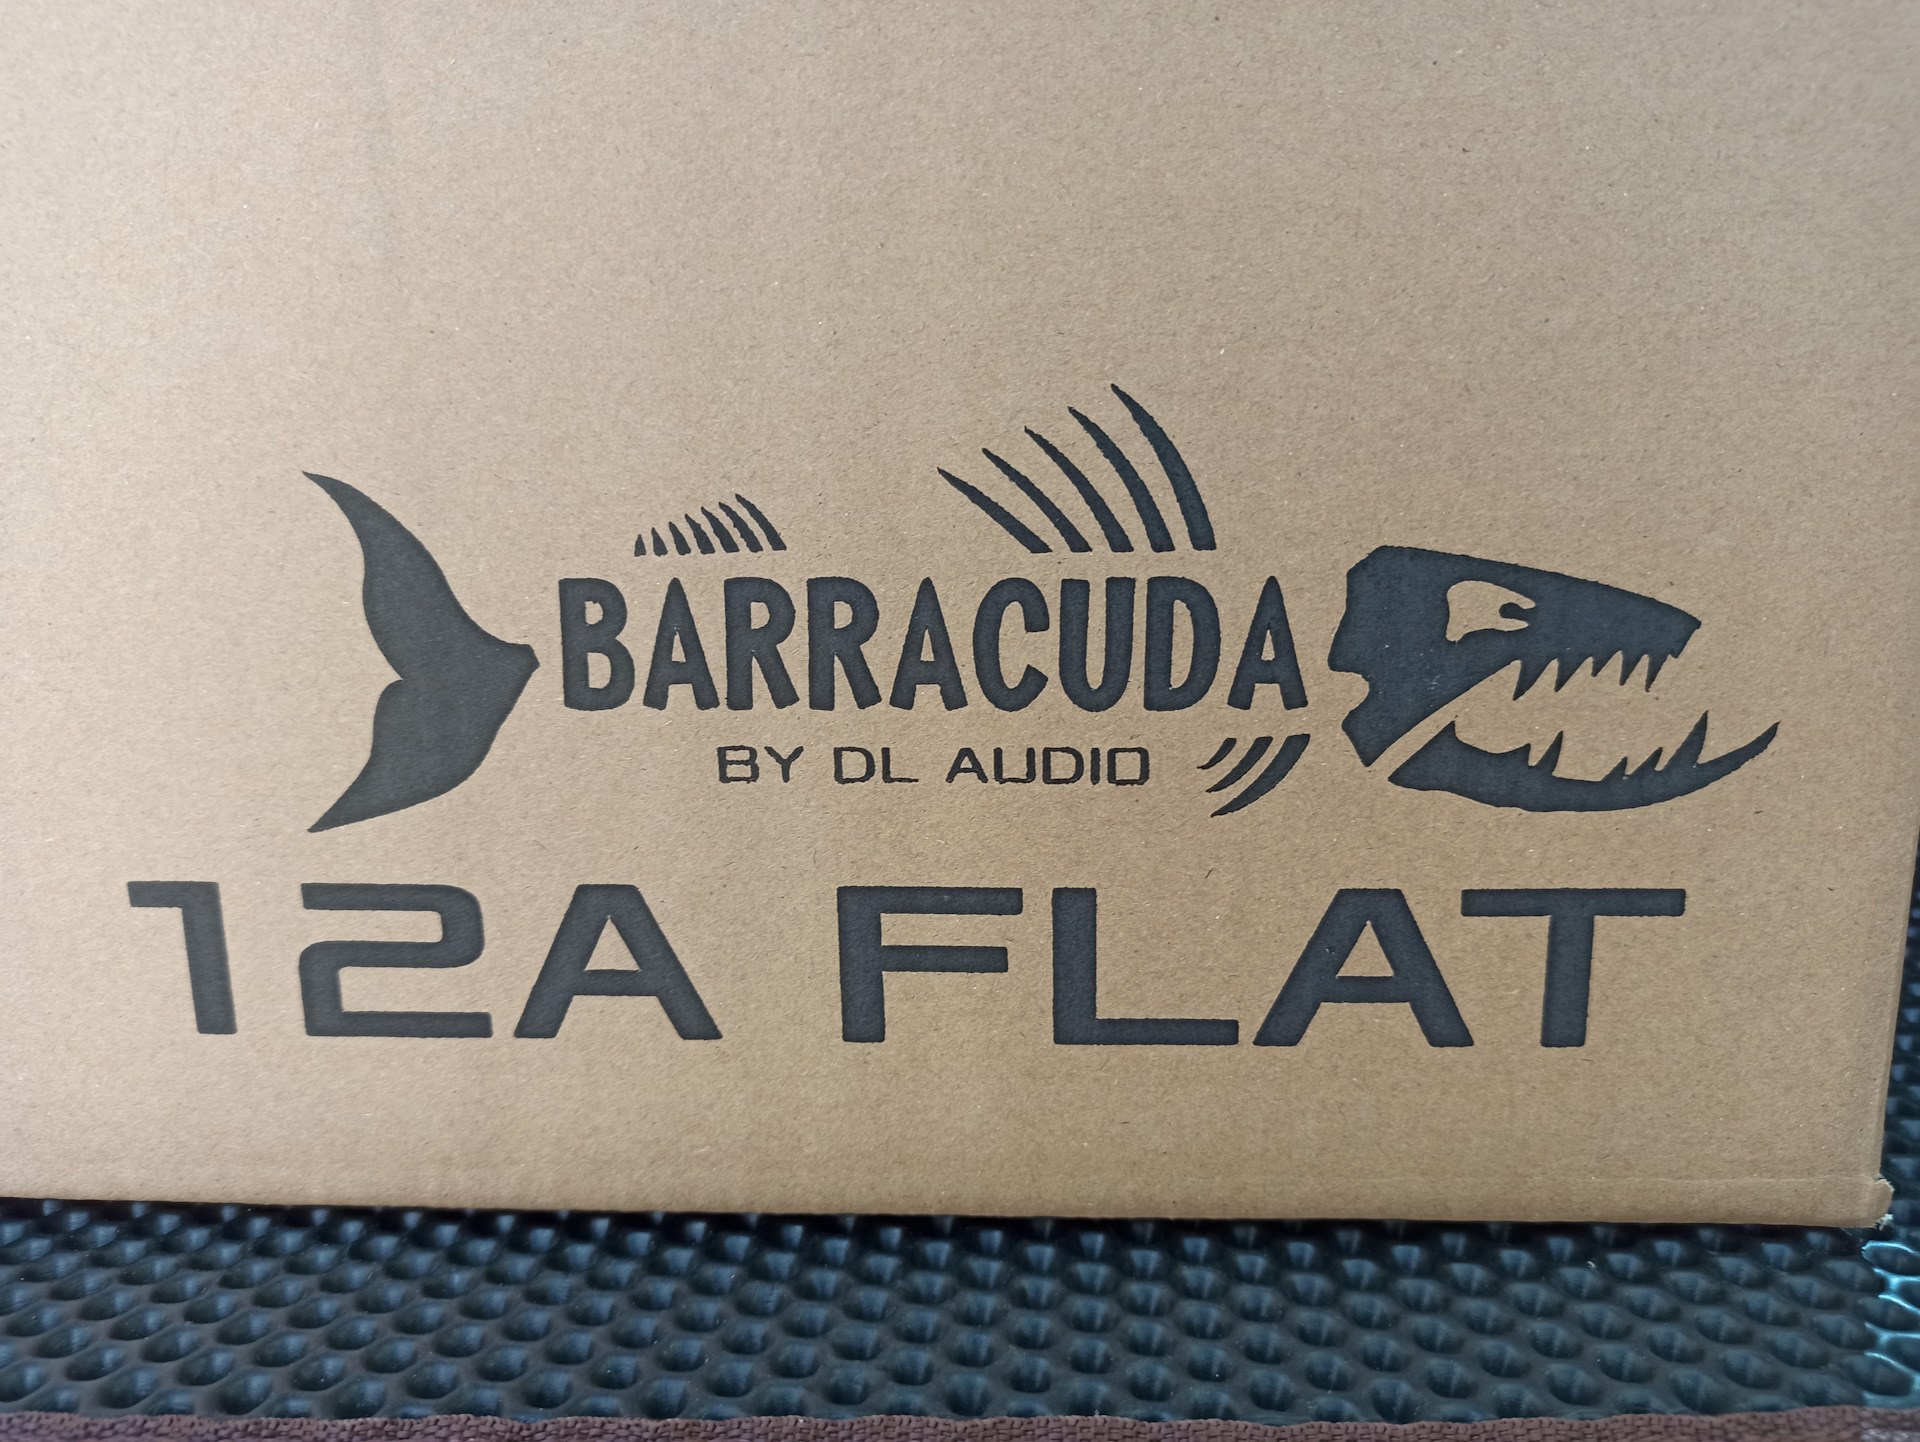 Barracuda 10 flat